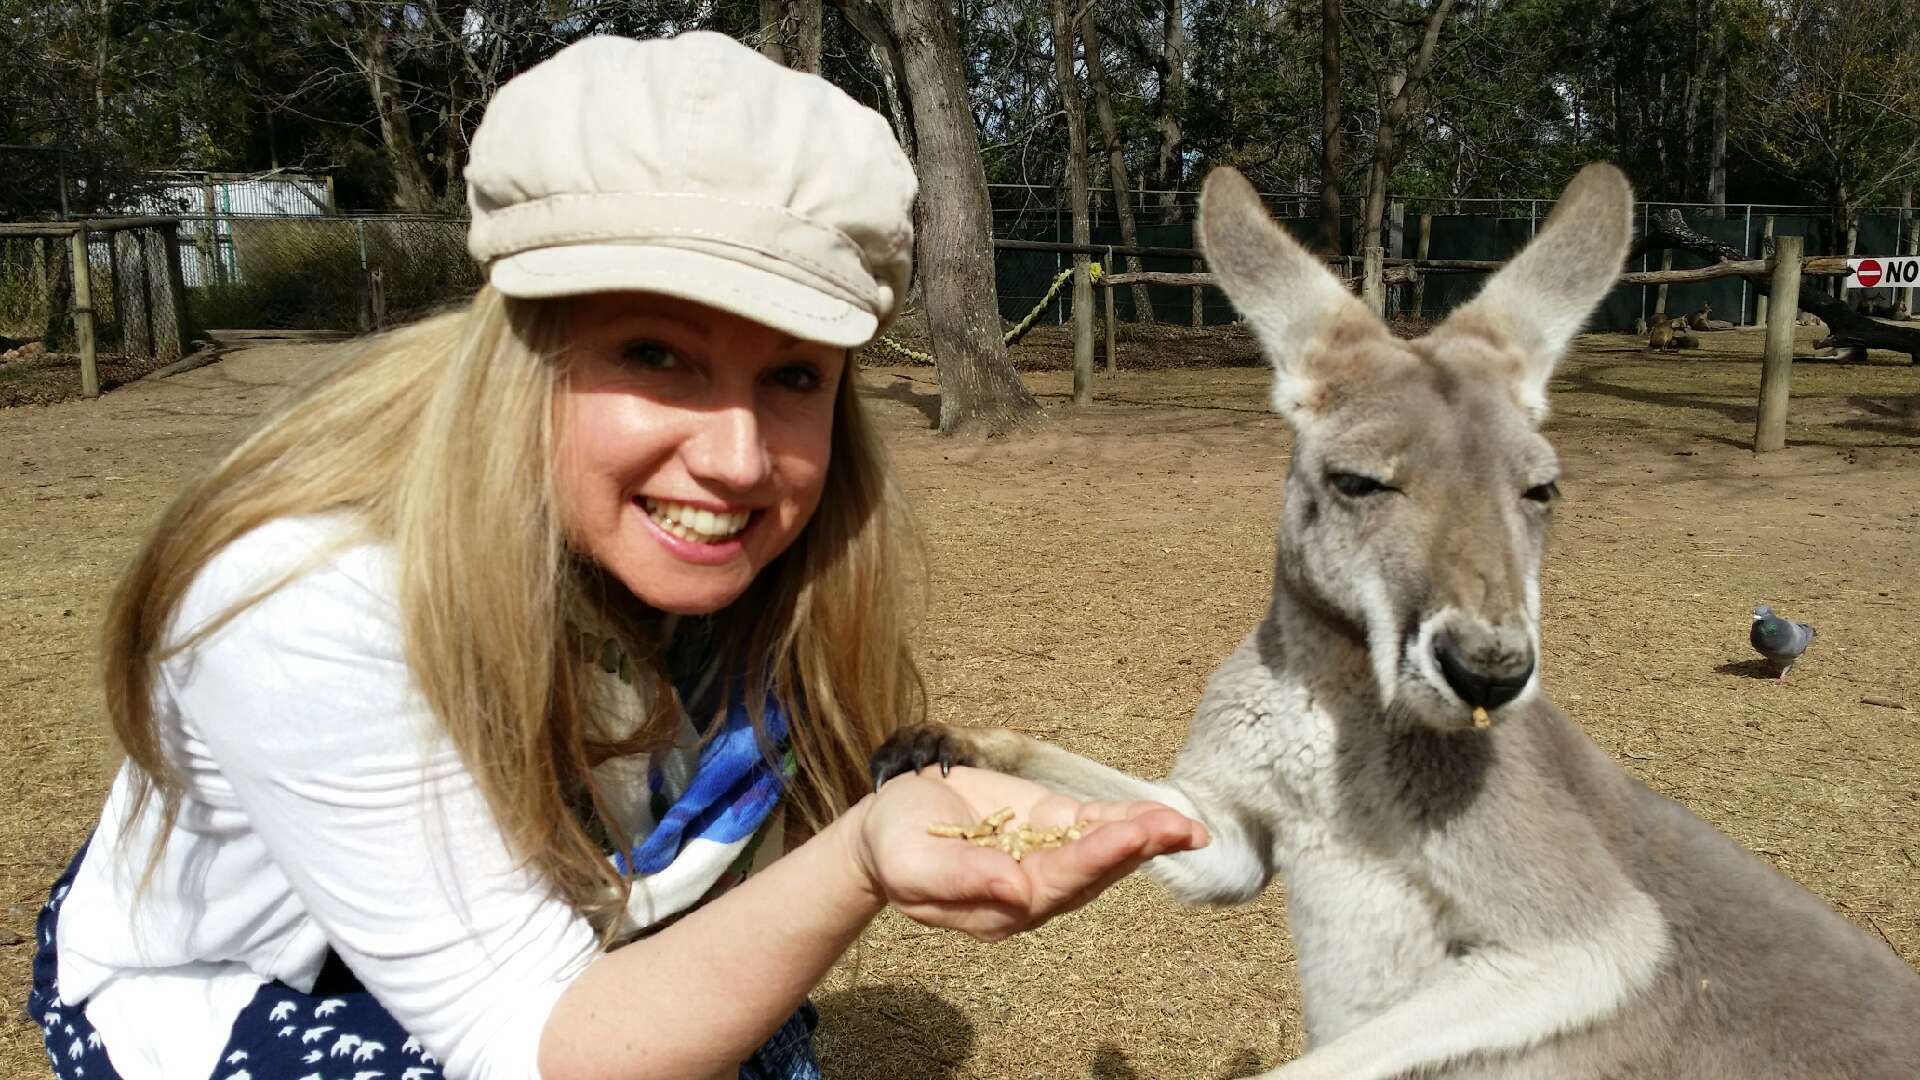 Karletta loves Kangaroos, Karletta Marie, Karletta Dionysiou, Work Travel Lifestyle